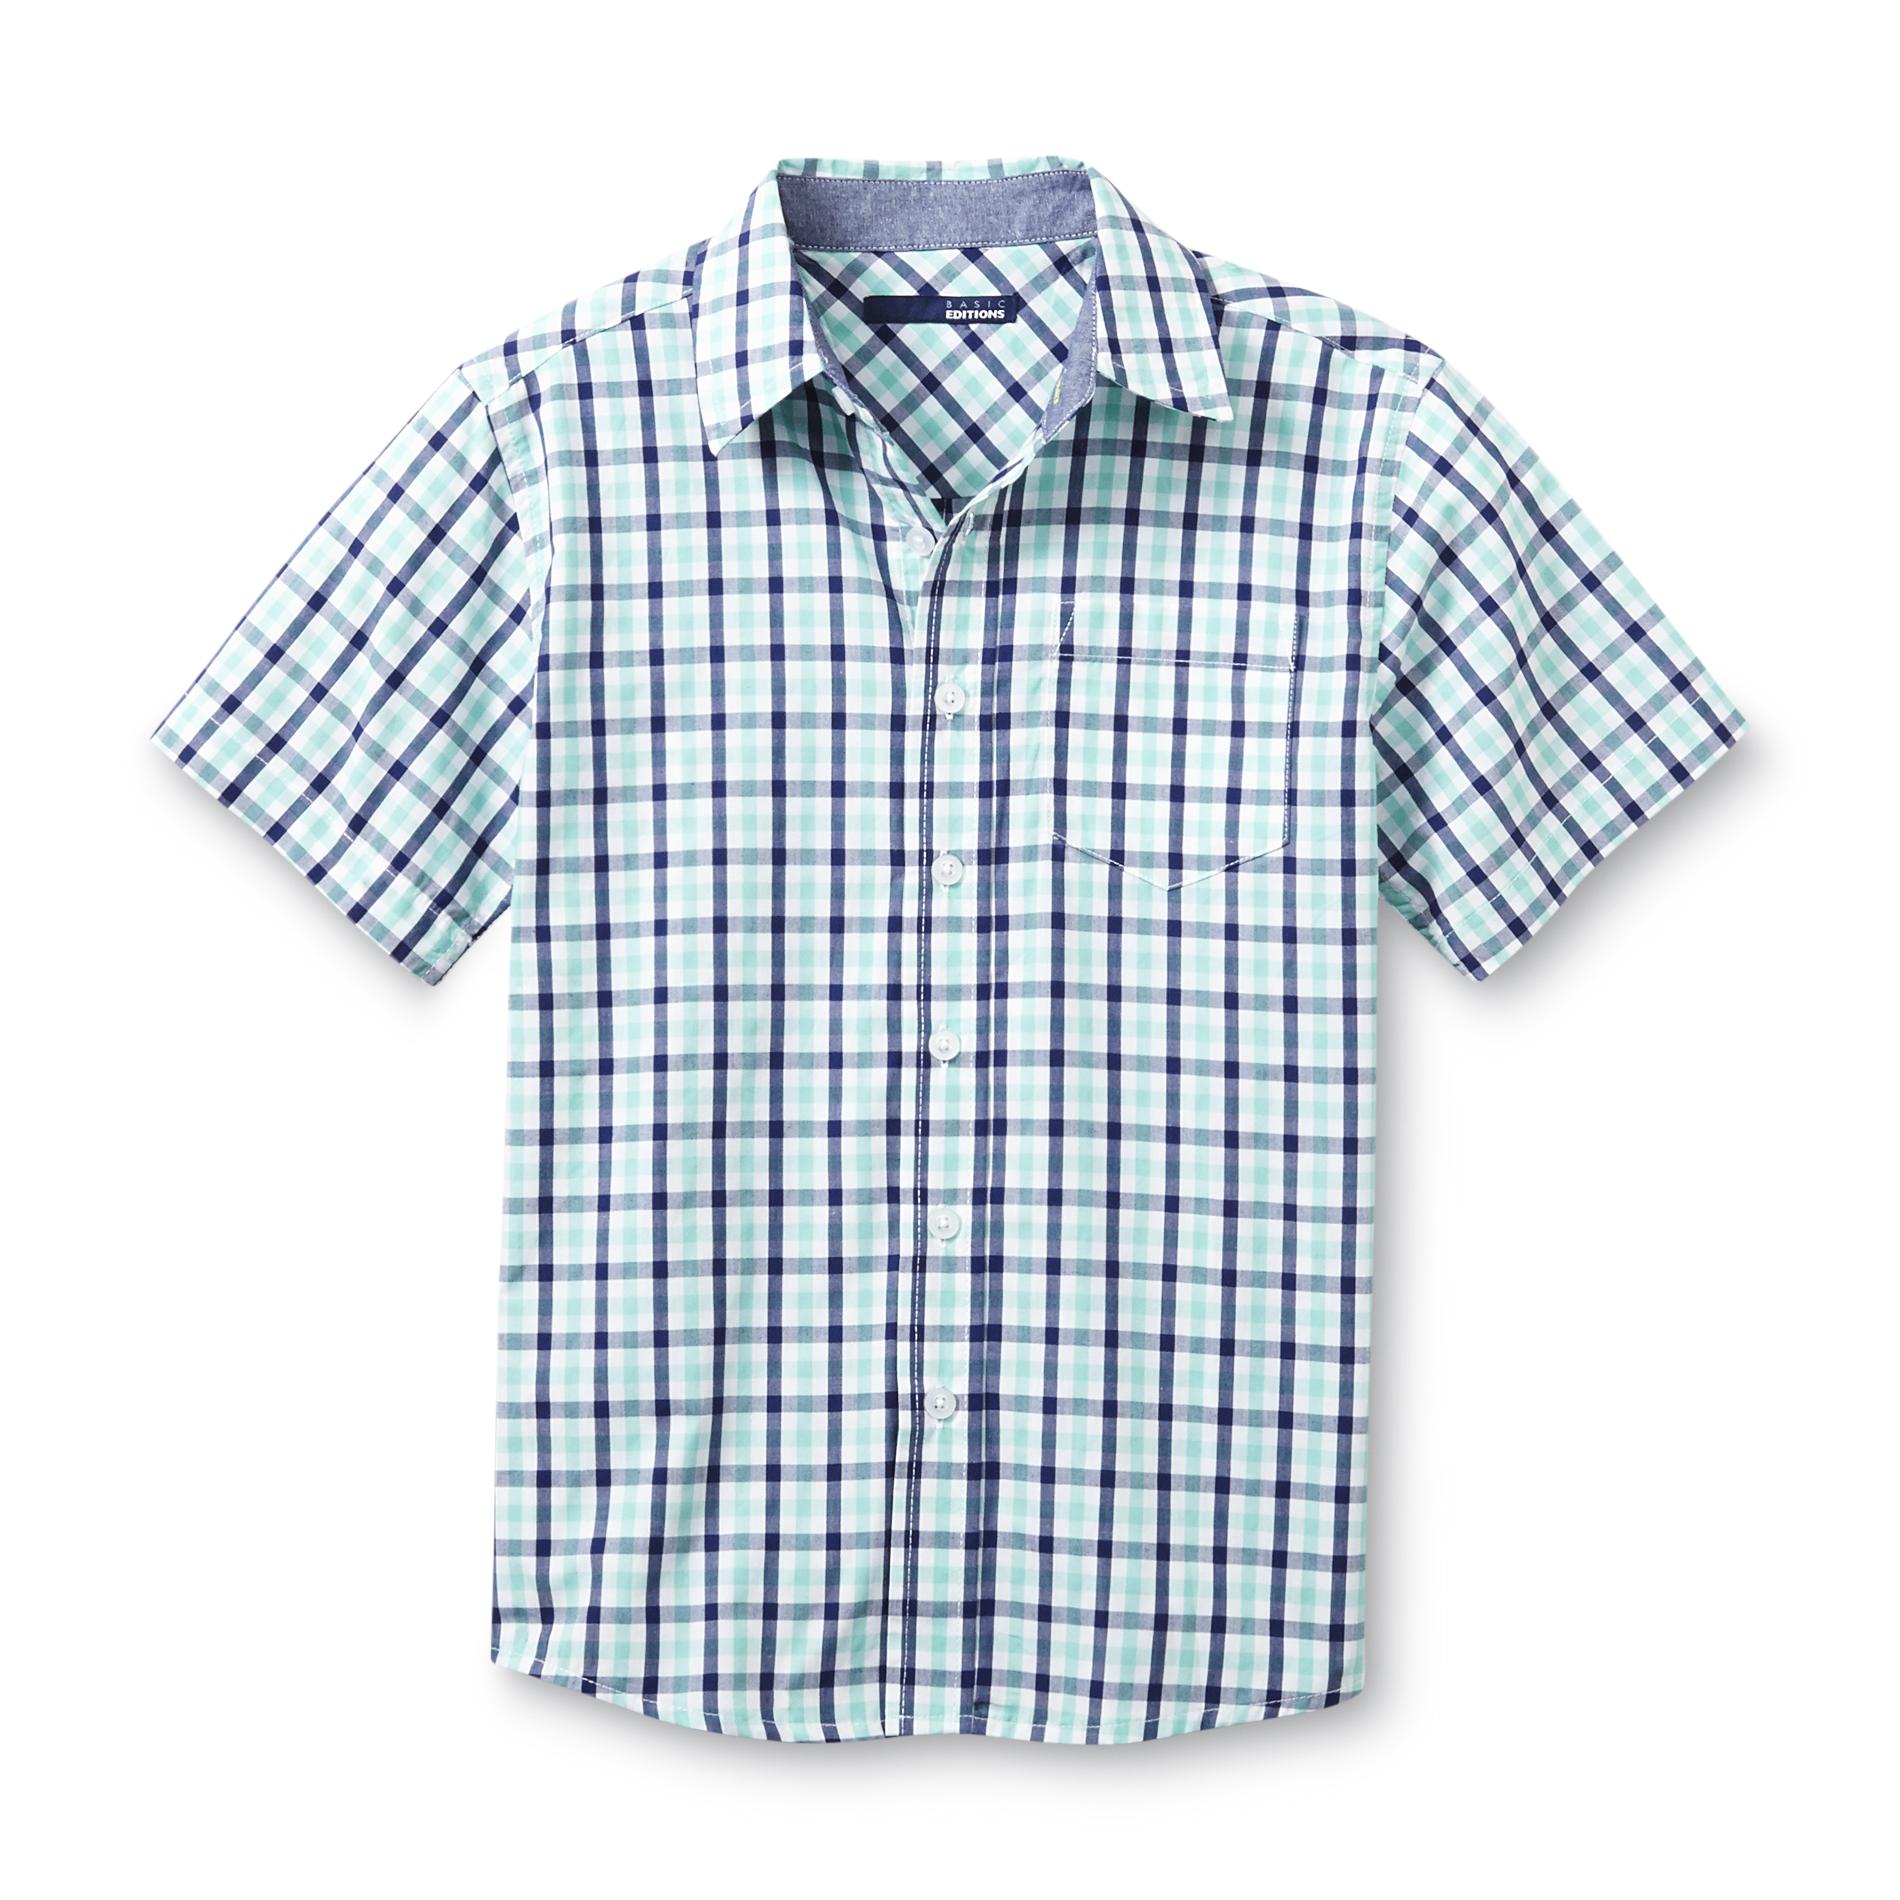 Basic Editions Boy's Button-Front Shirt - Plaid